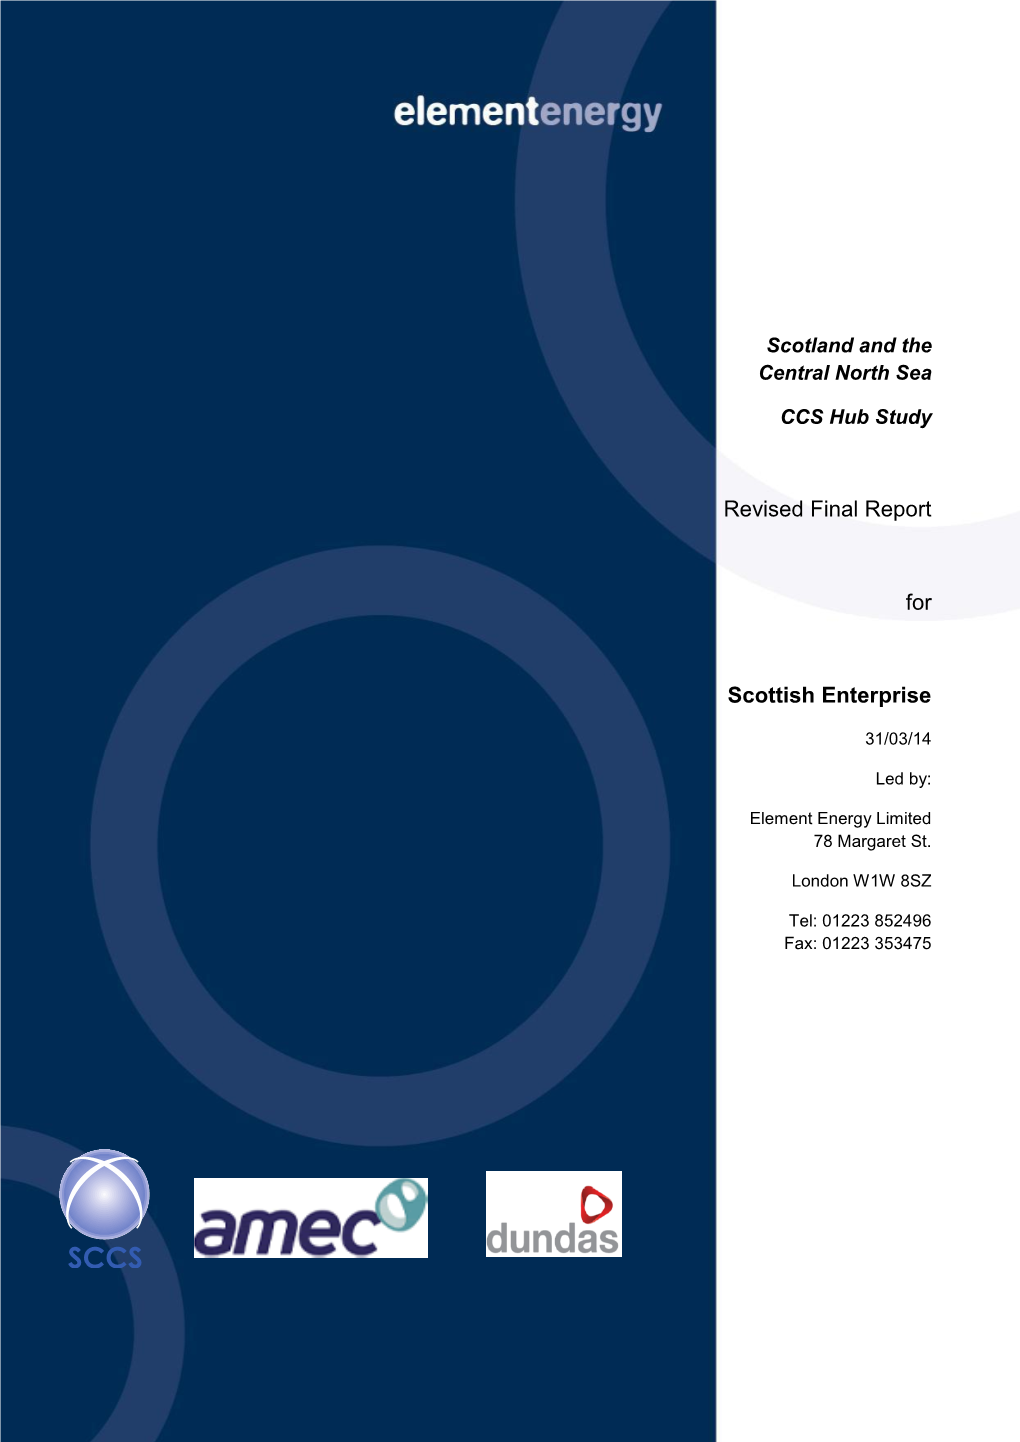 Revised Final Report for Scottish Enterprise